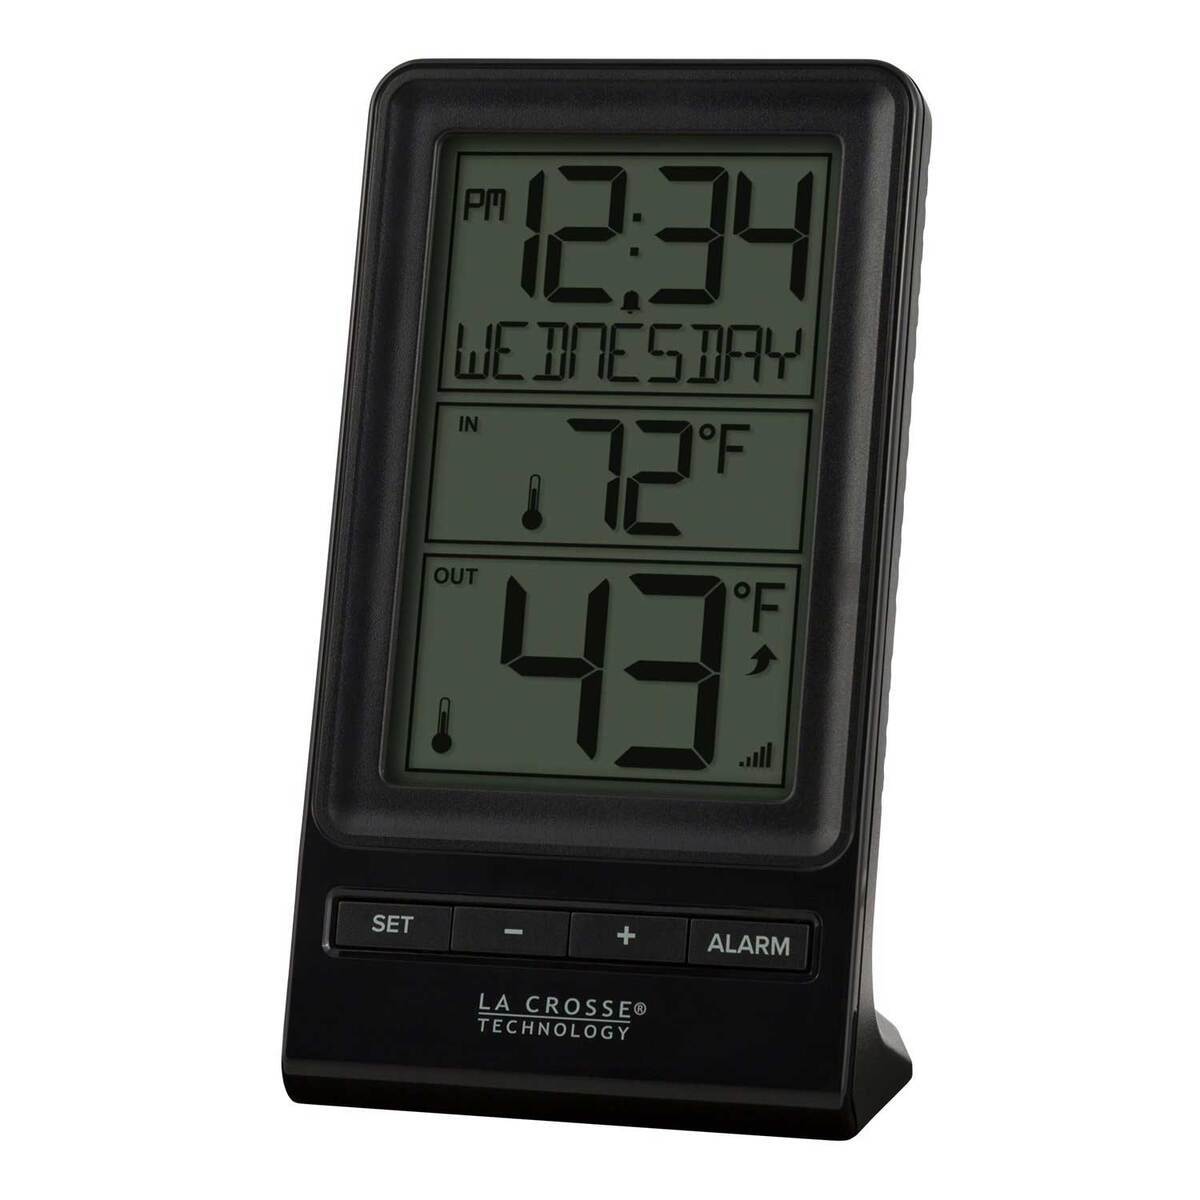 https://www.sportsmans.com/medias/lacrosse-technology-wireless-thermometer-1529435-1.jpg?context=bWFzdGVyfGltYWdlc3w1OTQxNHxpbWFnZS9qcGVnfGhjZi9oOTQvMTAwOTQ2MTg5NjgwOTQvMTUyOTQzNS0xX2Jhc2UtY29udmVyc2lvbkZvcm1hdF8xMjAwLWNvbnZlcnNpb25Gb3JtYXR8ZjU2YThjMTY4MDY4OTQ4NmQ4MmZmNDZiMTAxNmMxYjZkN2Y3NGFjYWViZWIxM2E3NWYwYzY1NGI4ZmRhMGYyZA